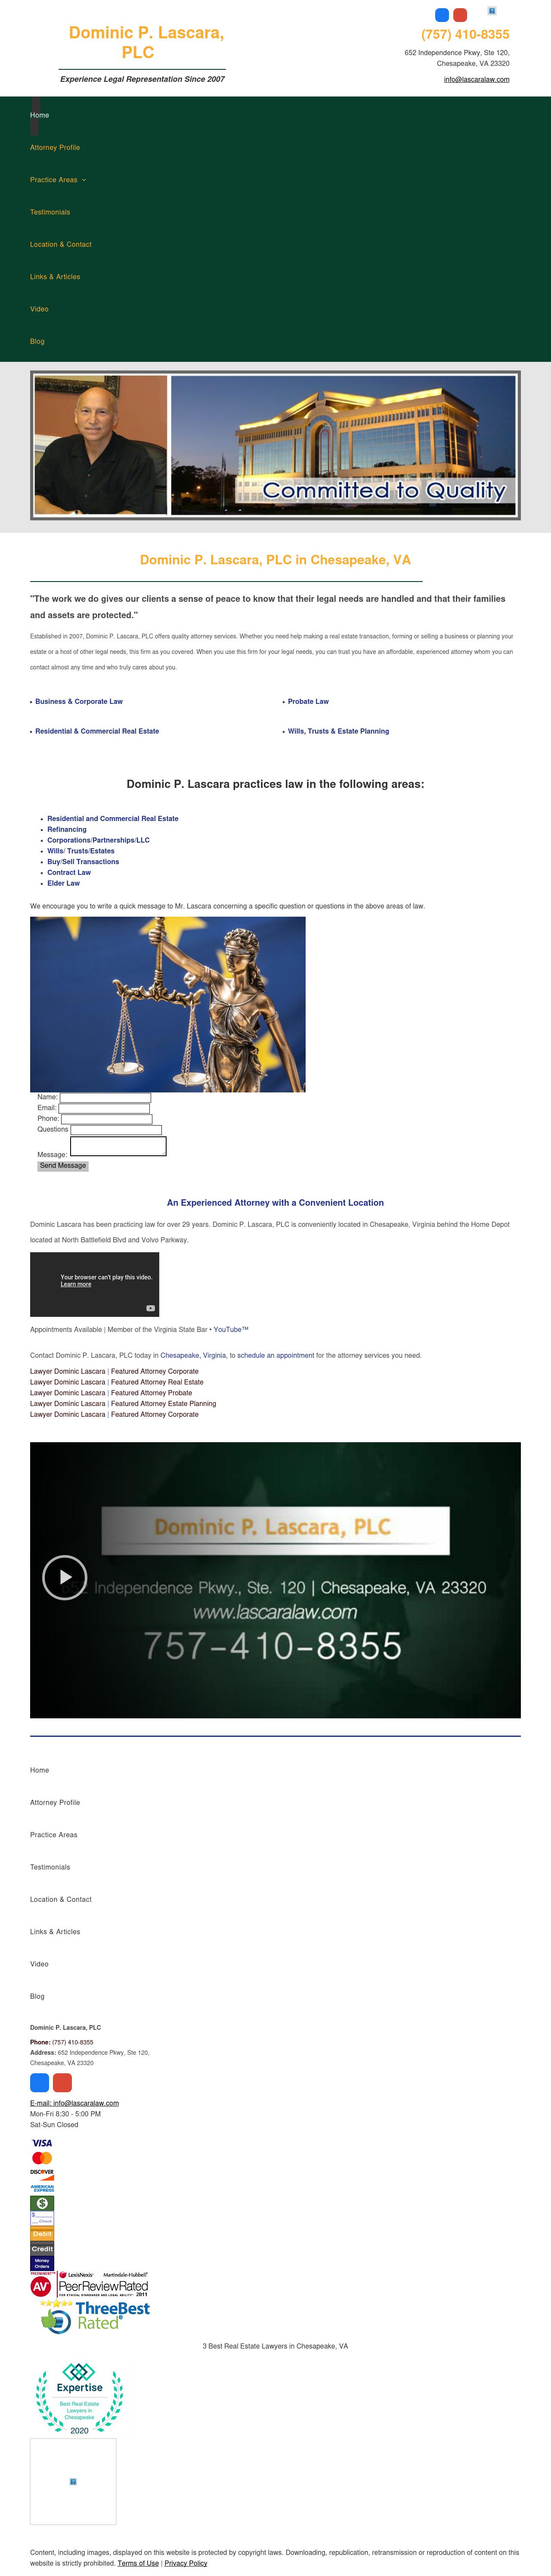 Dominic P. Lascara, PLC - Chesapeake VA Lawyers